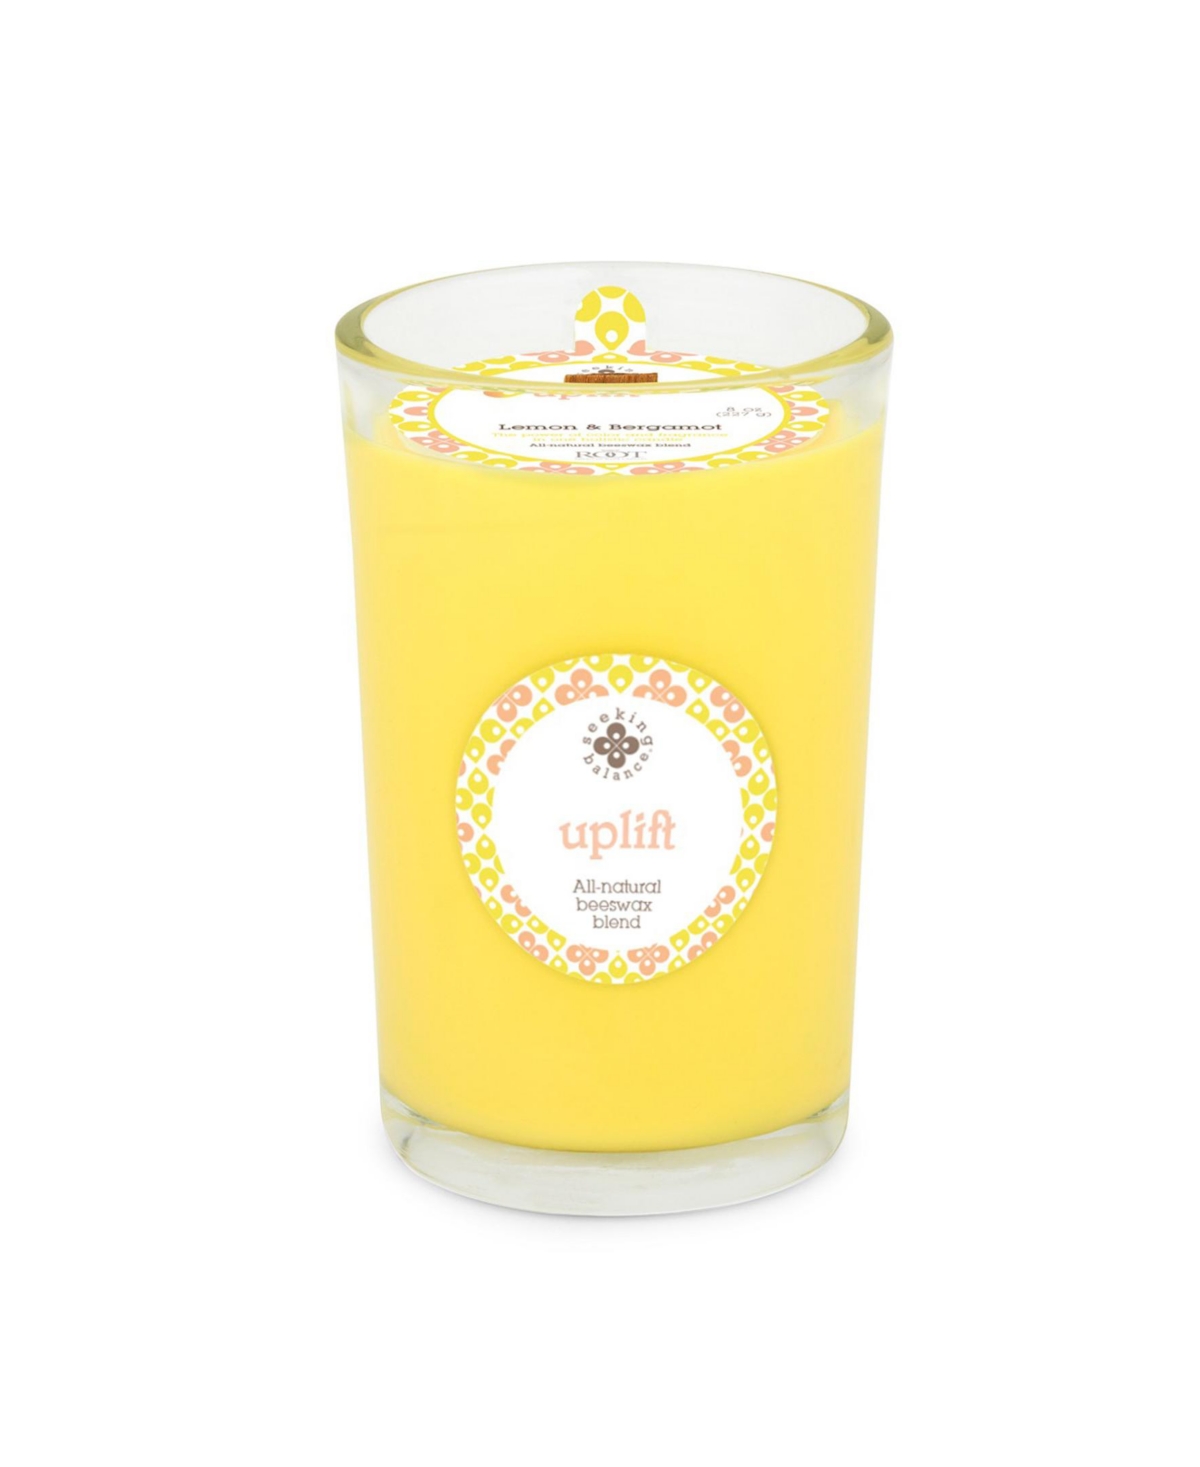 Seeking Balance Uplift Lemon Bergamot Spa Jar Candle, 8 oz - Yellow